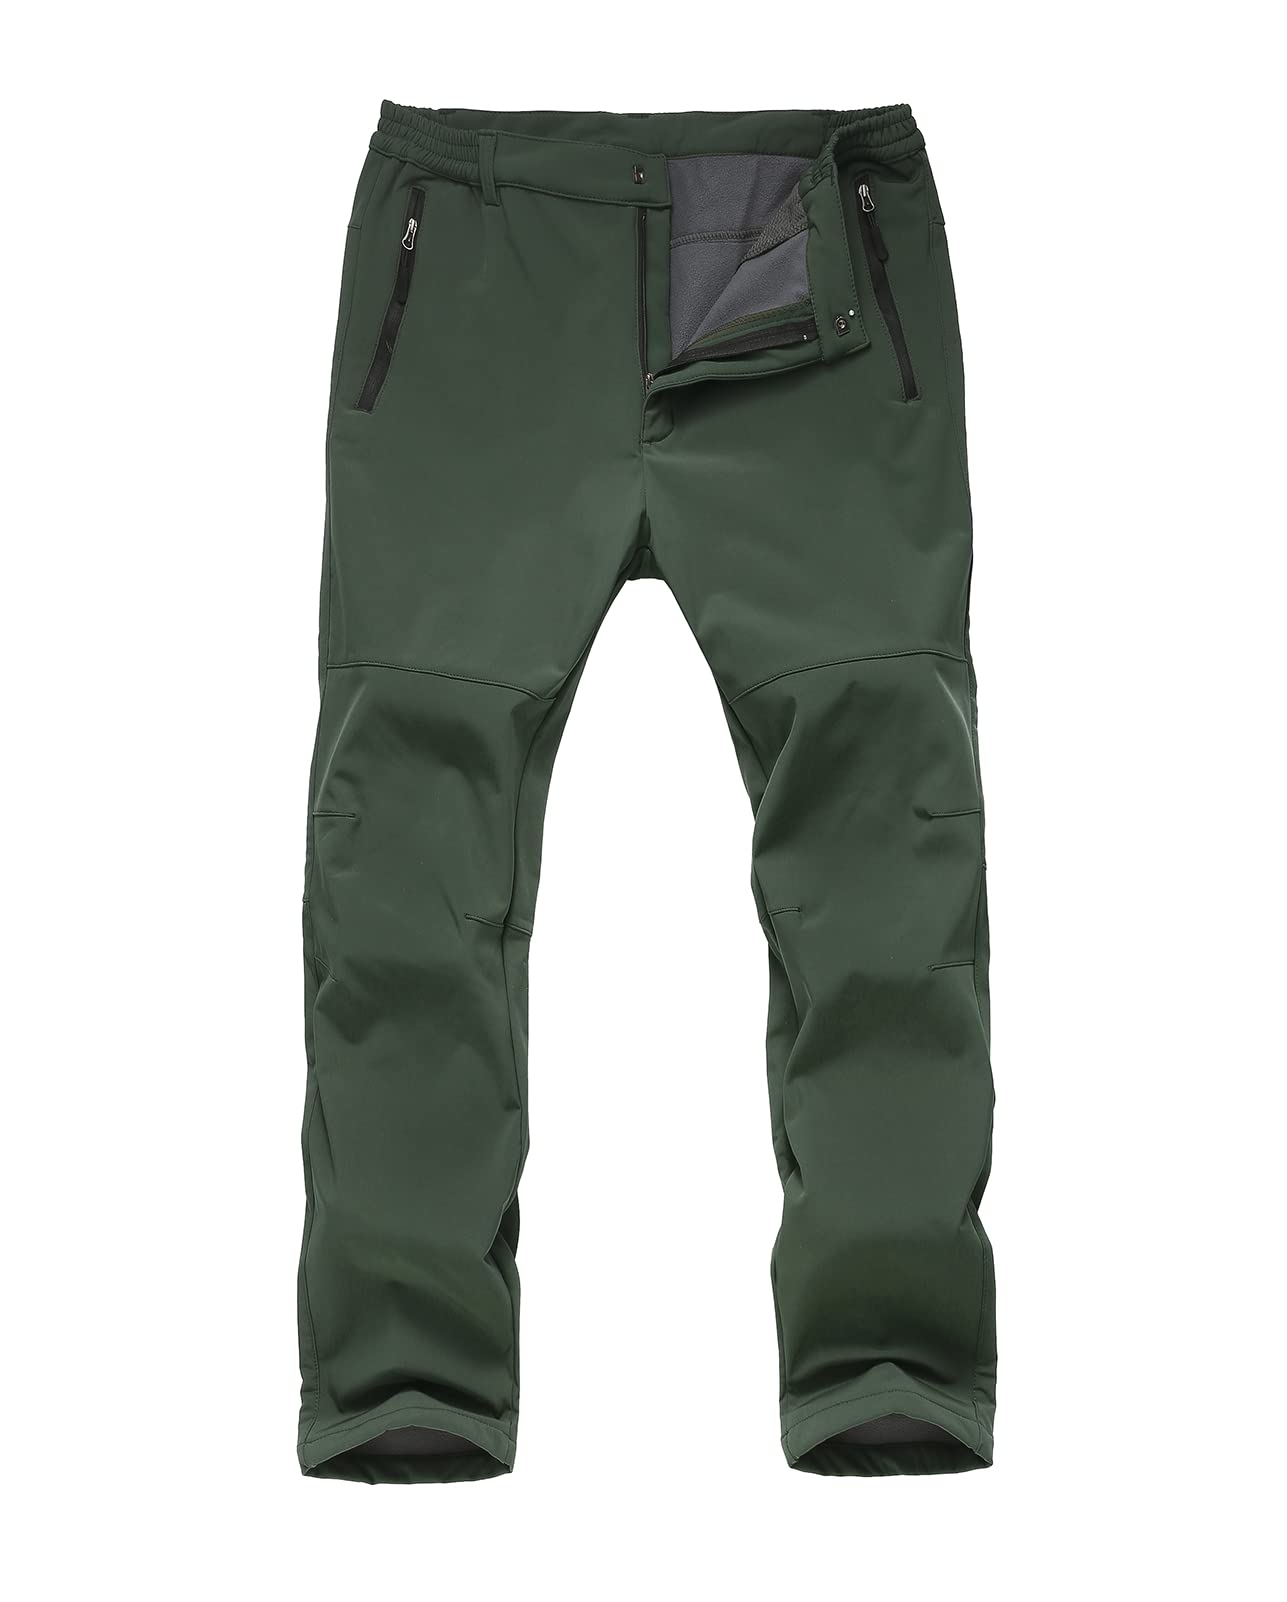 Lavenicole Mens Snow Ski Pants Waterproof Insulated Winter Hiking  Snowboarding Pants Fleece Lined Army Green 34